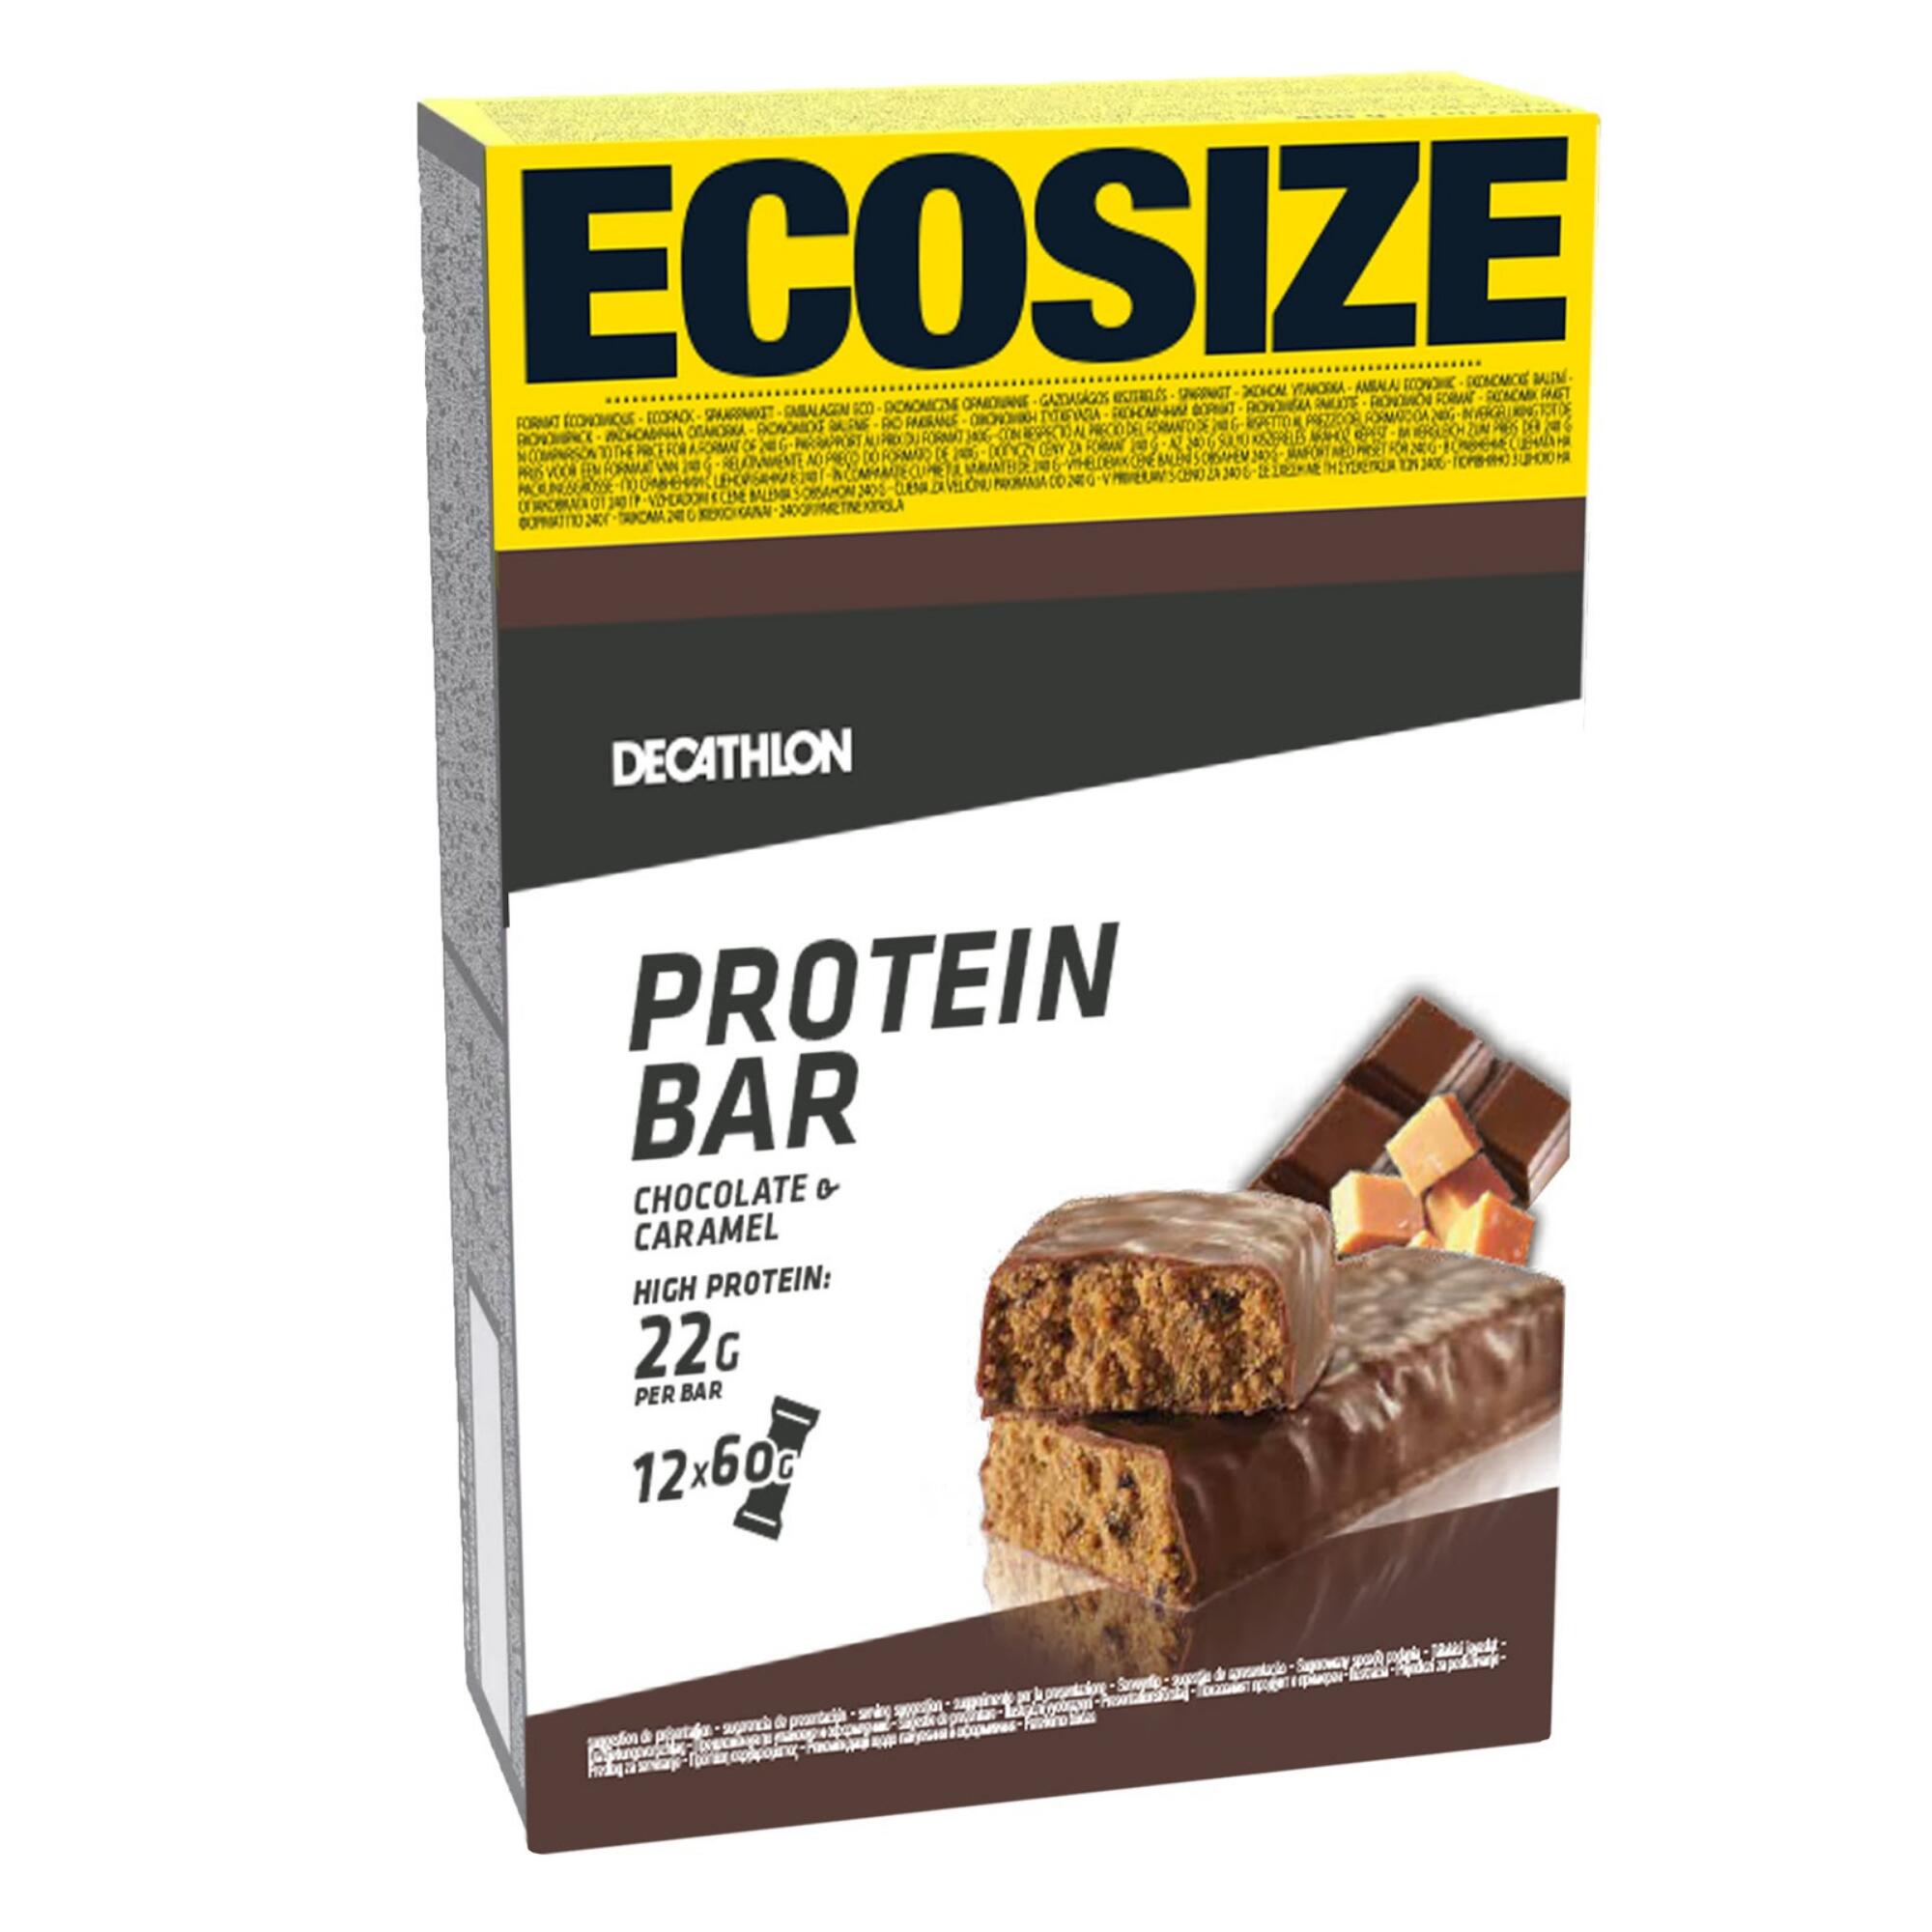 Protein Bar Chocolate Caramel Ecosize 12-Pack 1/2